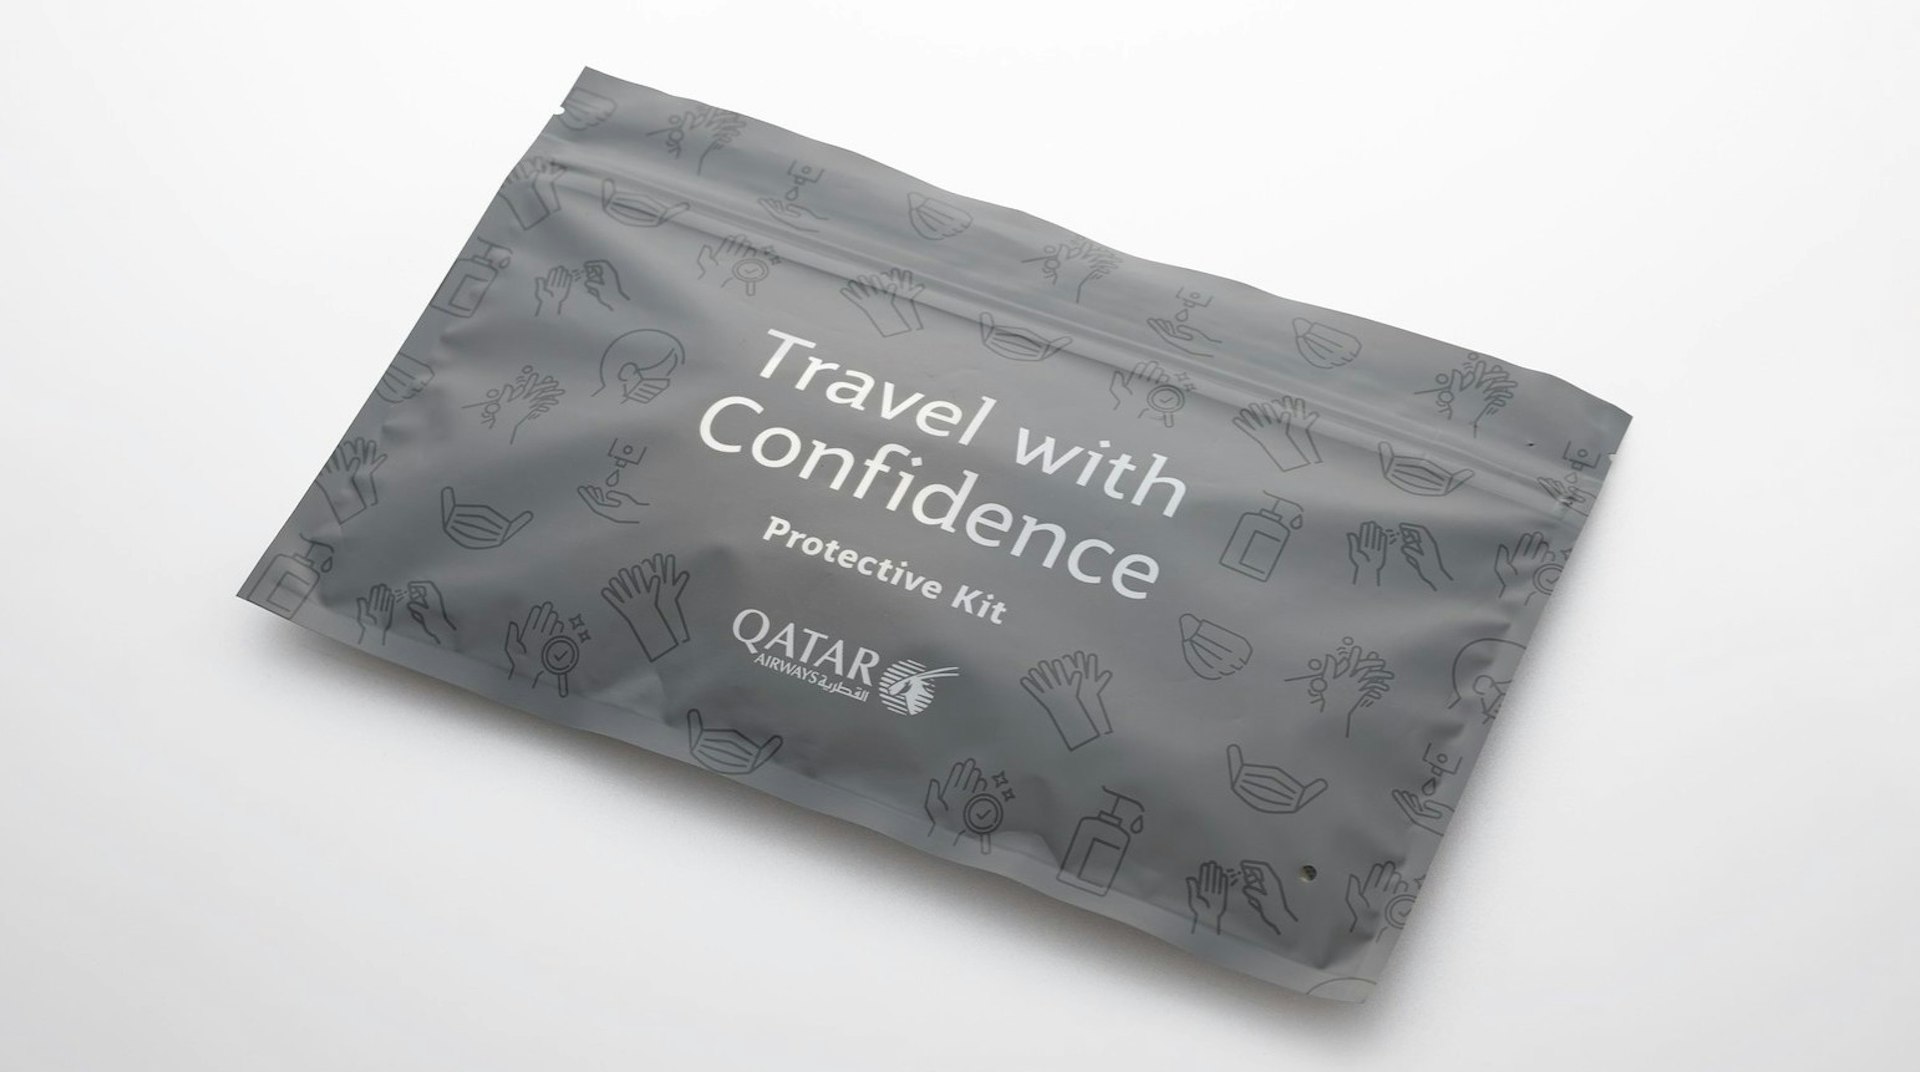 The ziploc pouch given to Qatar airways